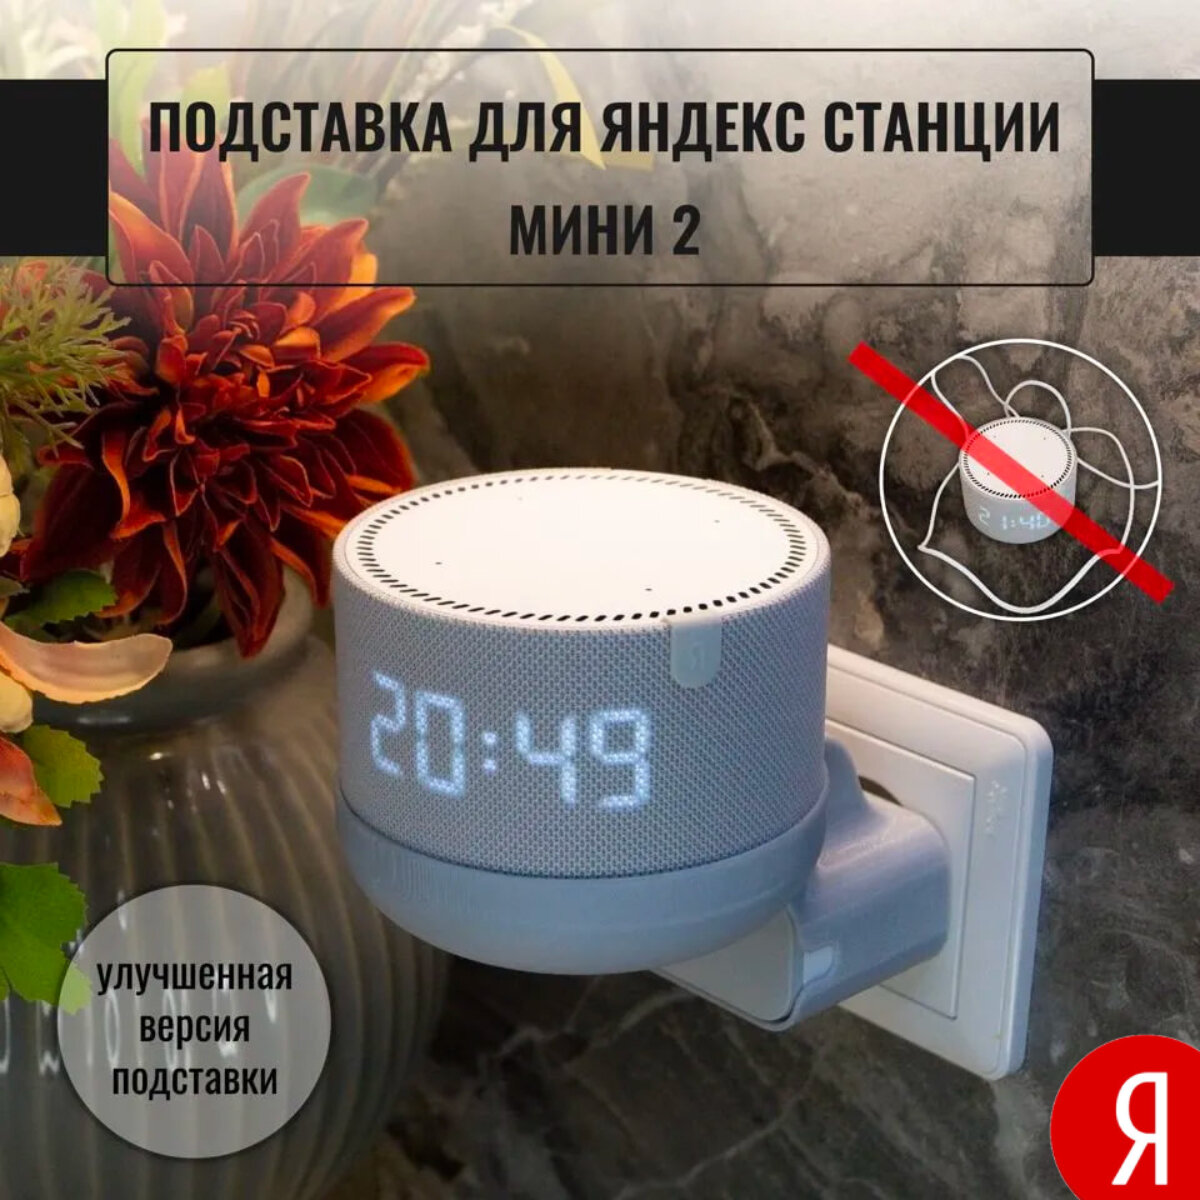 Подставка с креплением в розетку для Яндекс Станции Мини 